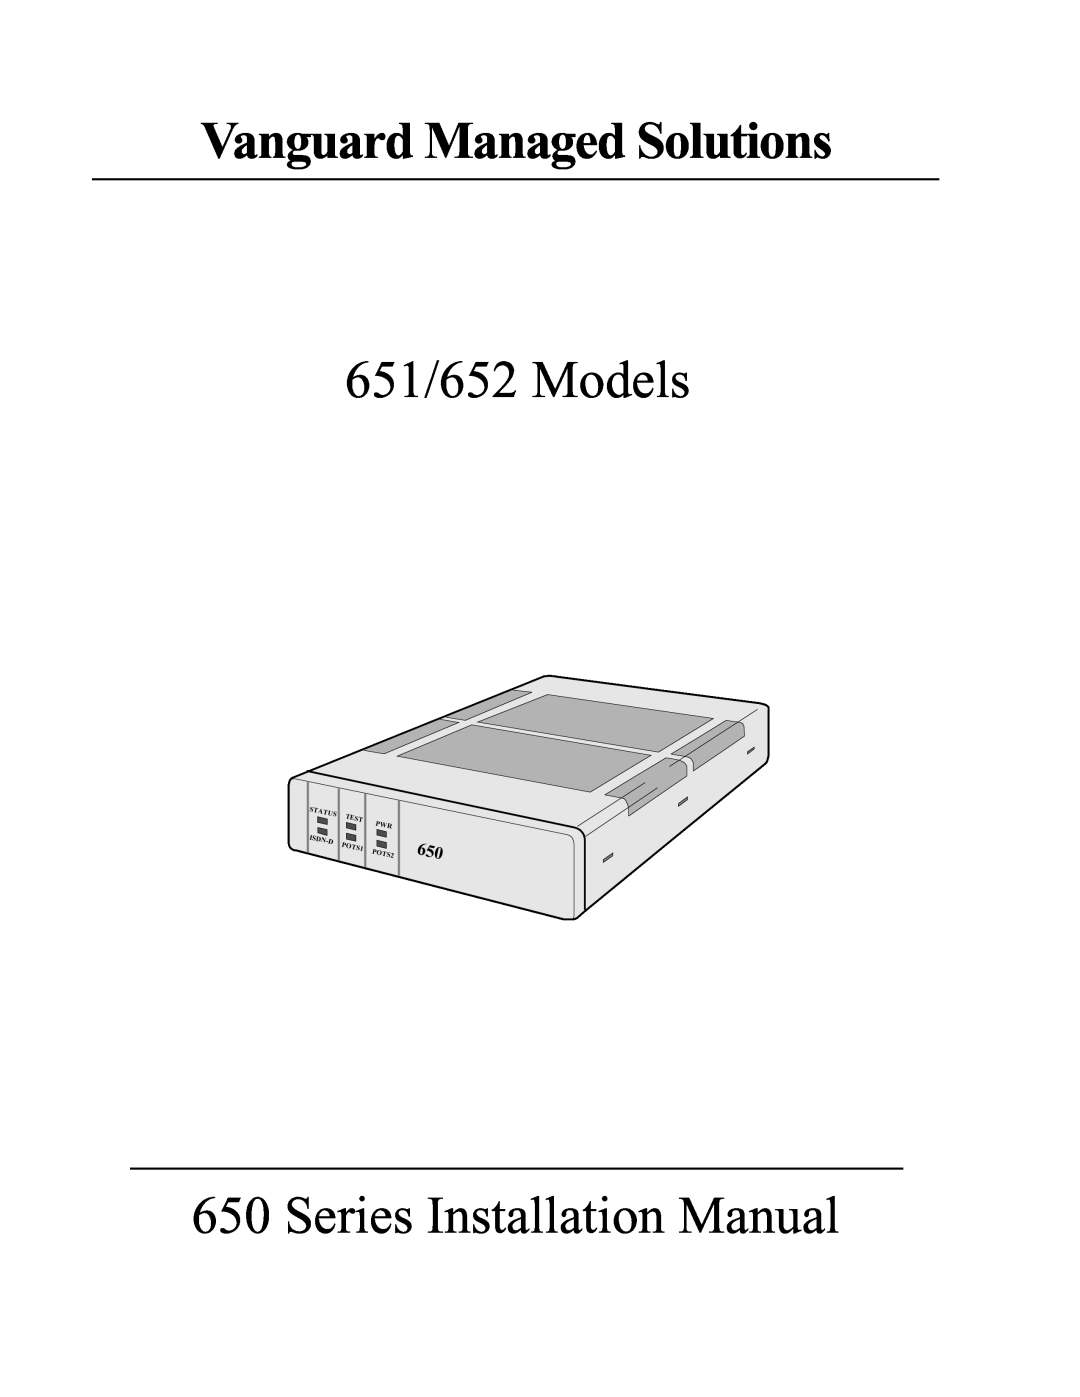 Vanguard Managed Solutions 650 installation manual Vanguard Managed Solutions, 651/652 Models, Series Installation Manual 